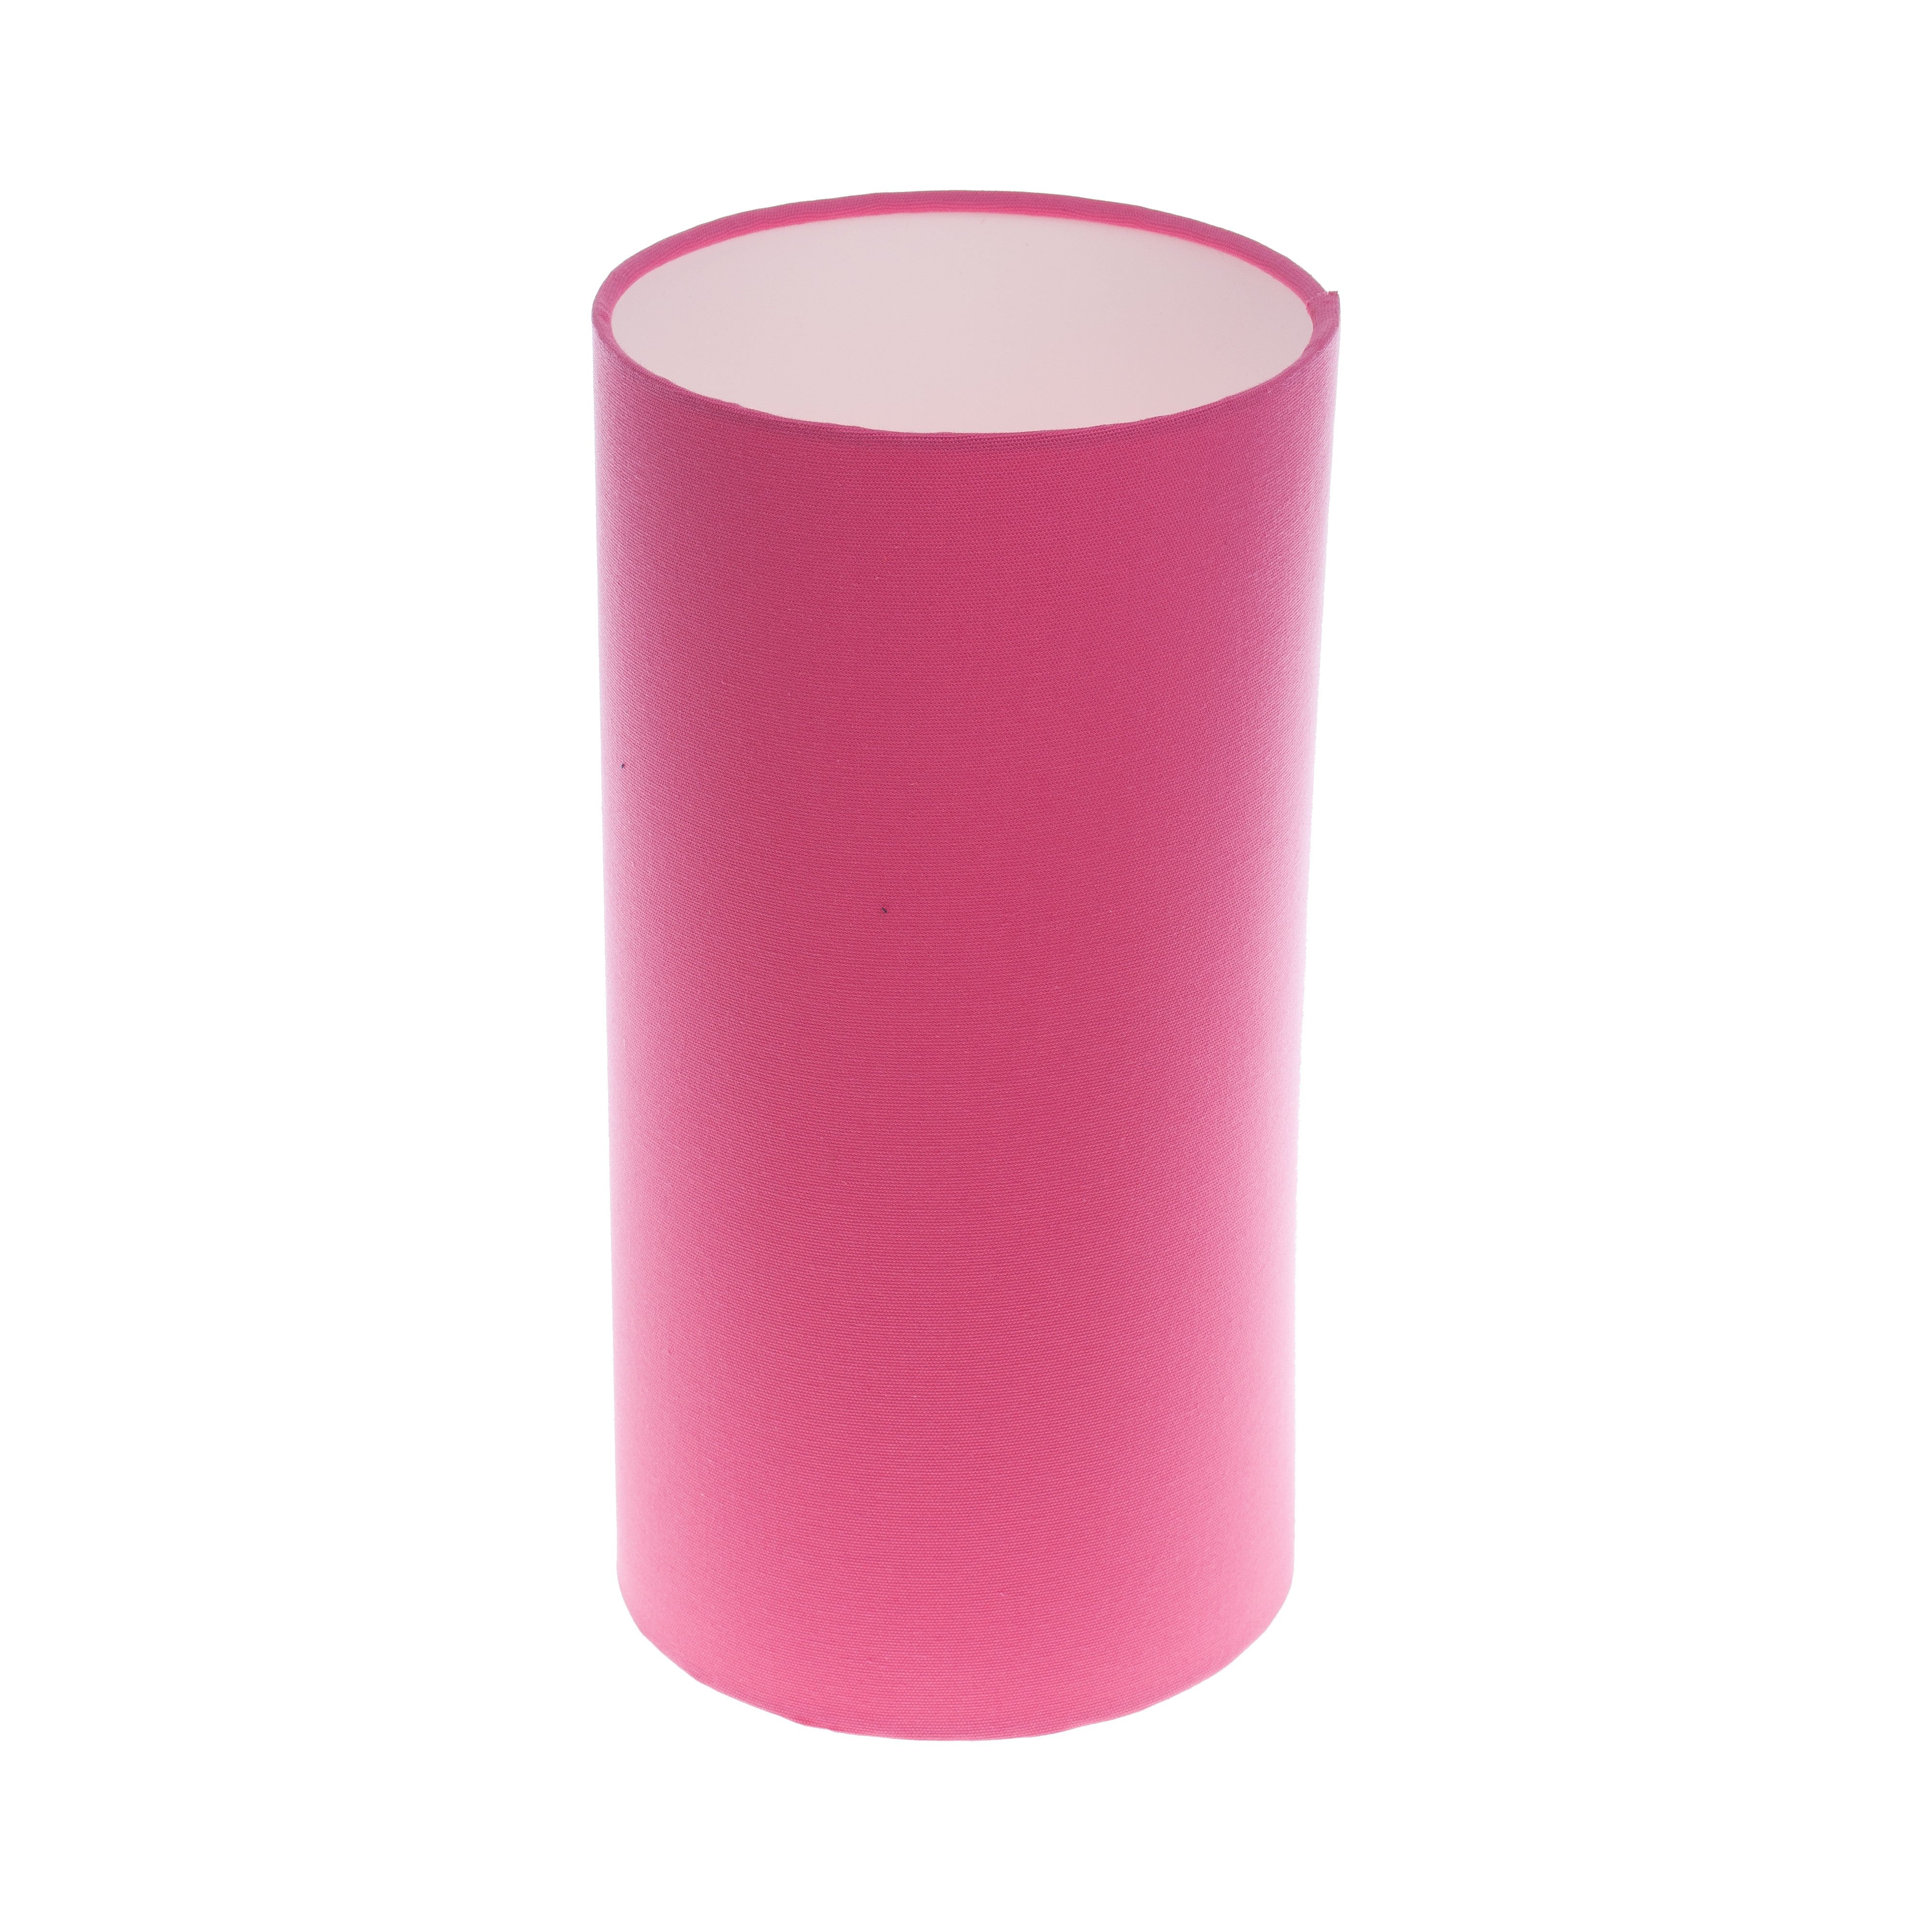 Sorbet Bright Pink Tall Drum Lampshade, Narrow Drum Lamp Shades